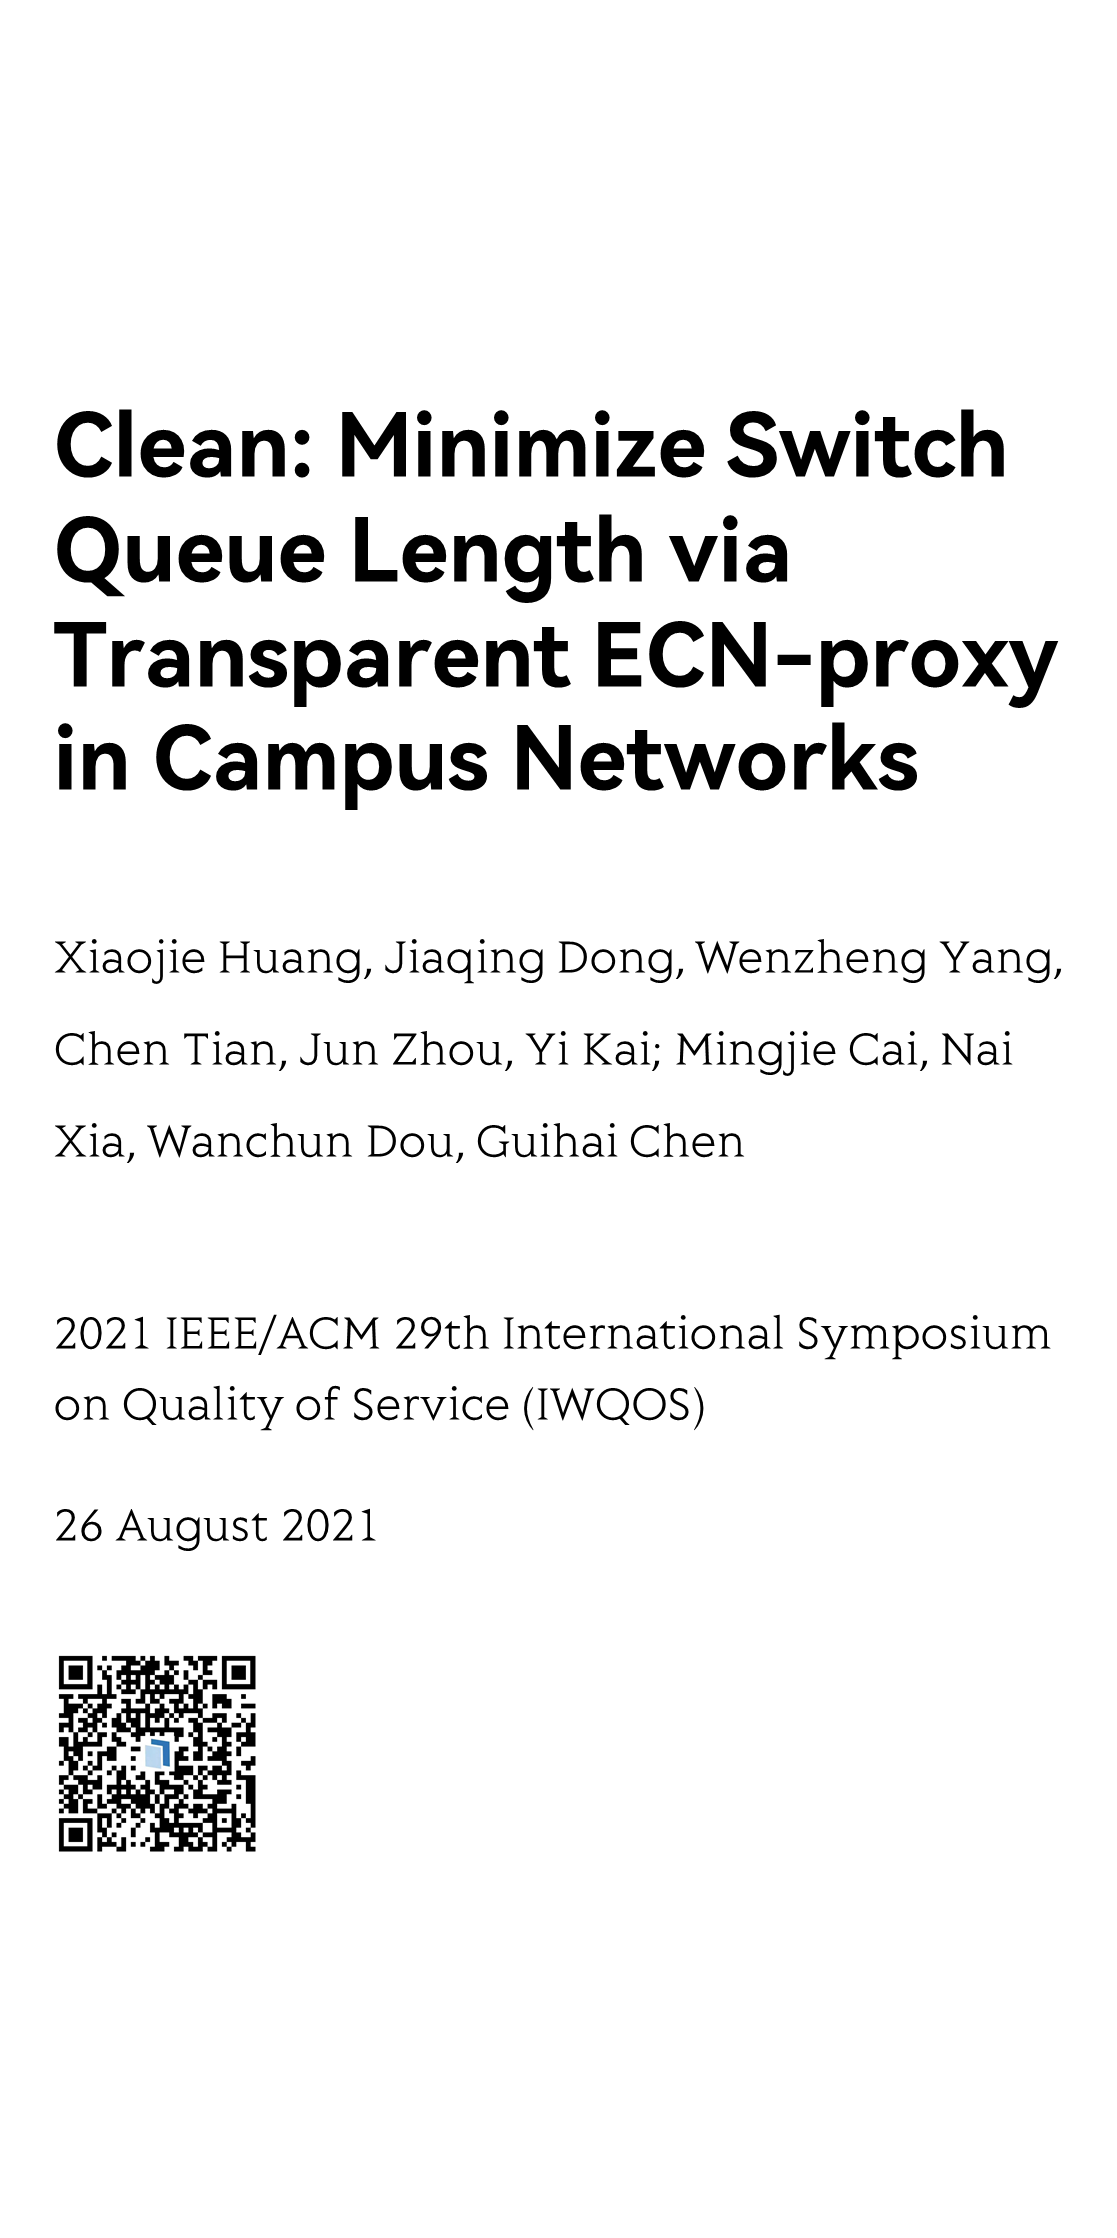 Clean: Minimize Switch Queue Length via Transparent ECN-proxy in Campus Networks_1